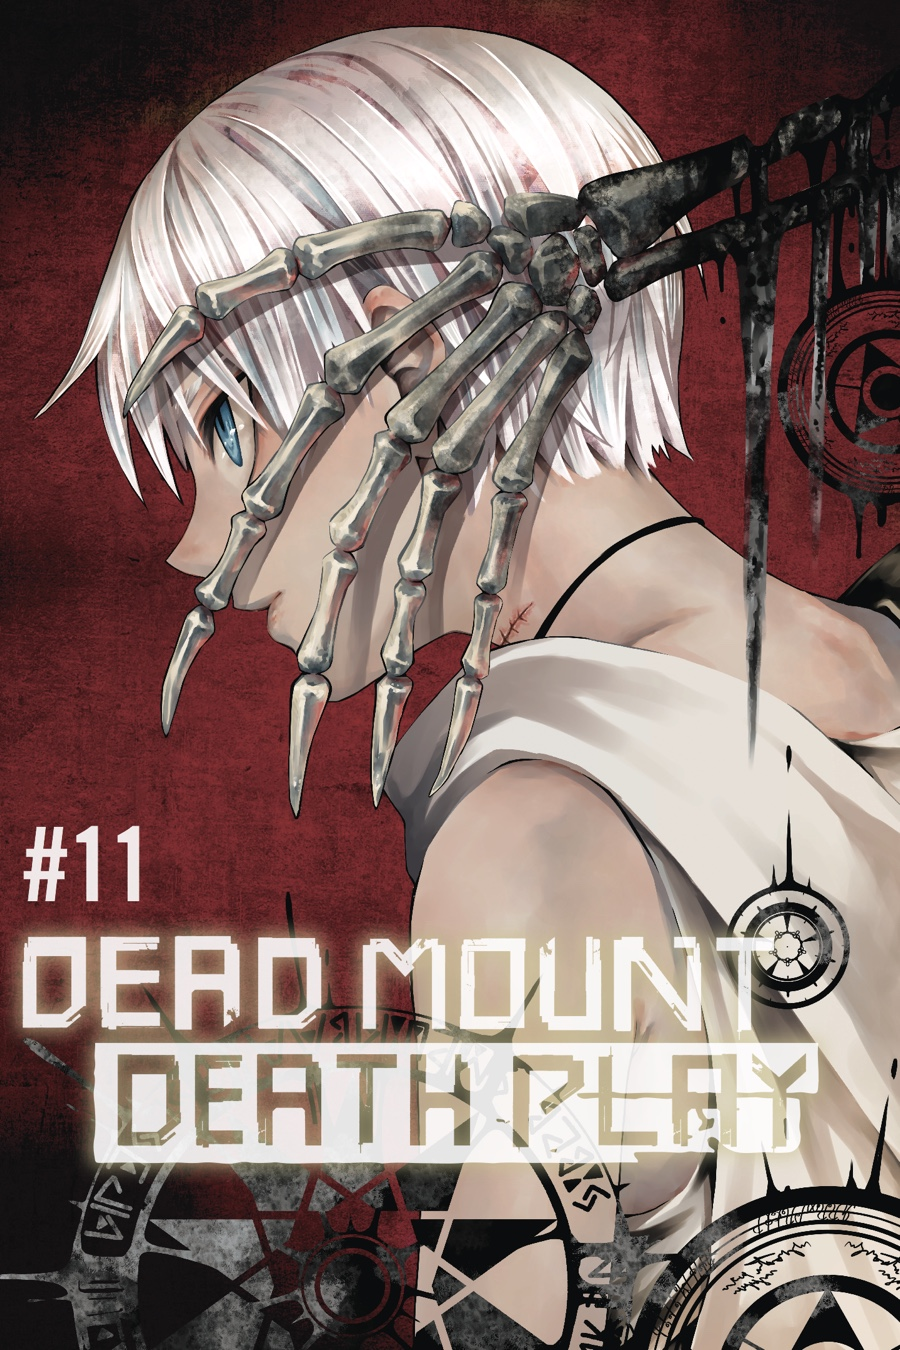 Fumiyo Yamada (Dead Mount Death Play) - Pictures 